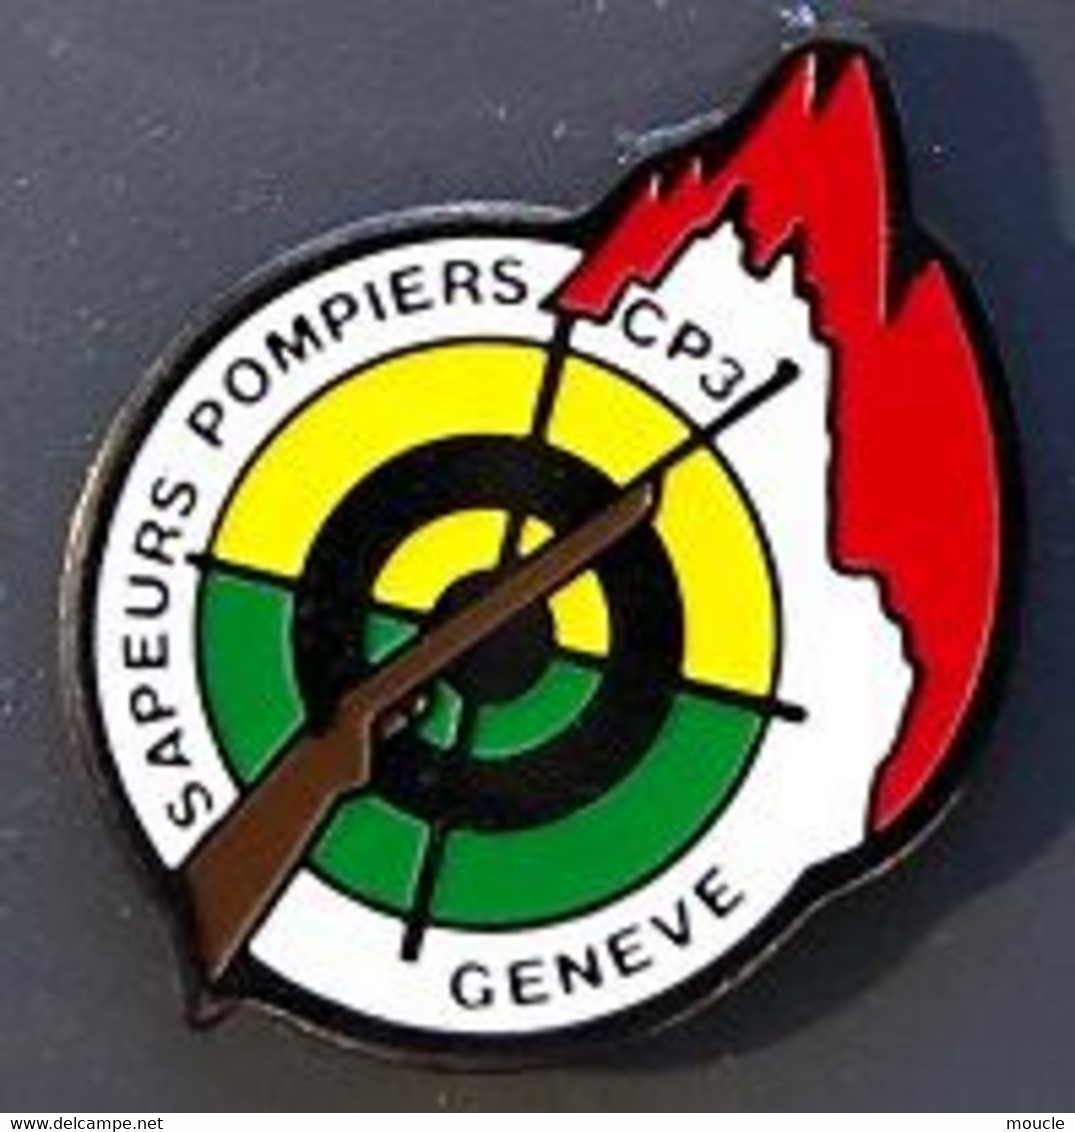 SAPEURS POMPIERS GENEVE CP3 - COMPAGNIE 3 - FUSIL - CIBLE - GENFER FEUERWEHTMANN - FIREFIGHTER GENEVA - POMPIERE -  (25) - Brandweerman